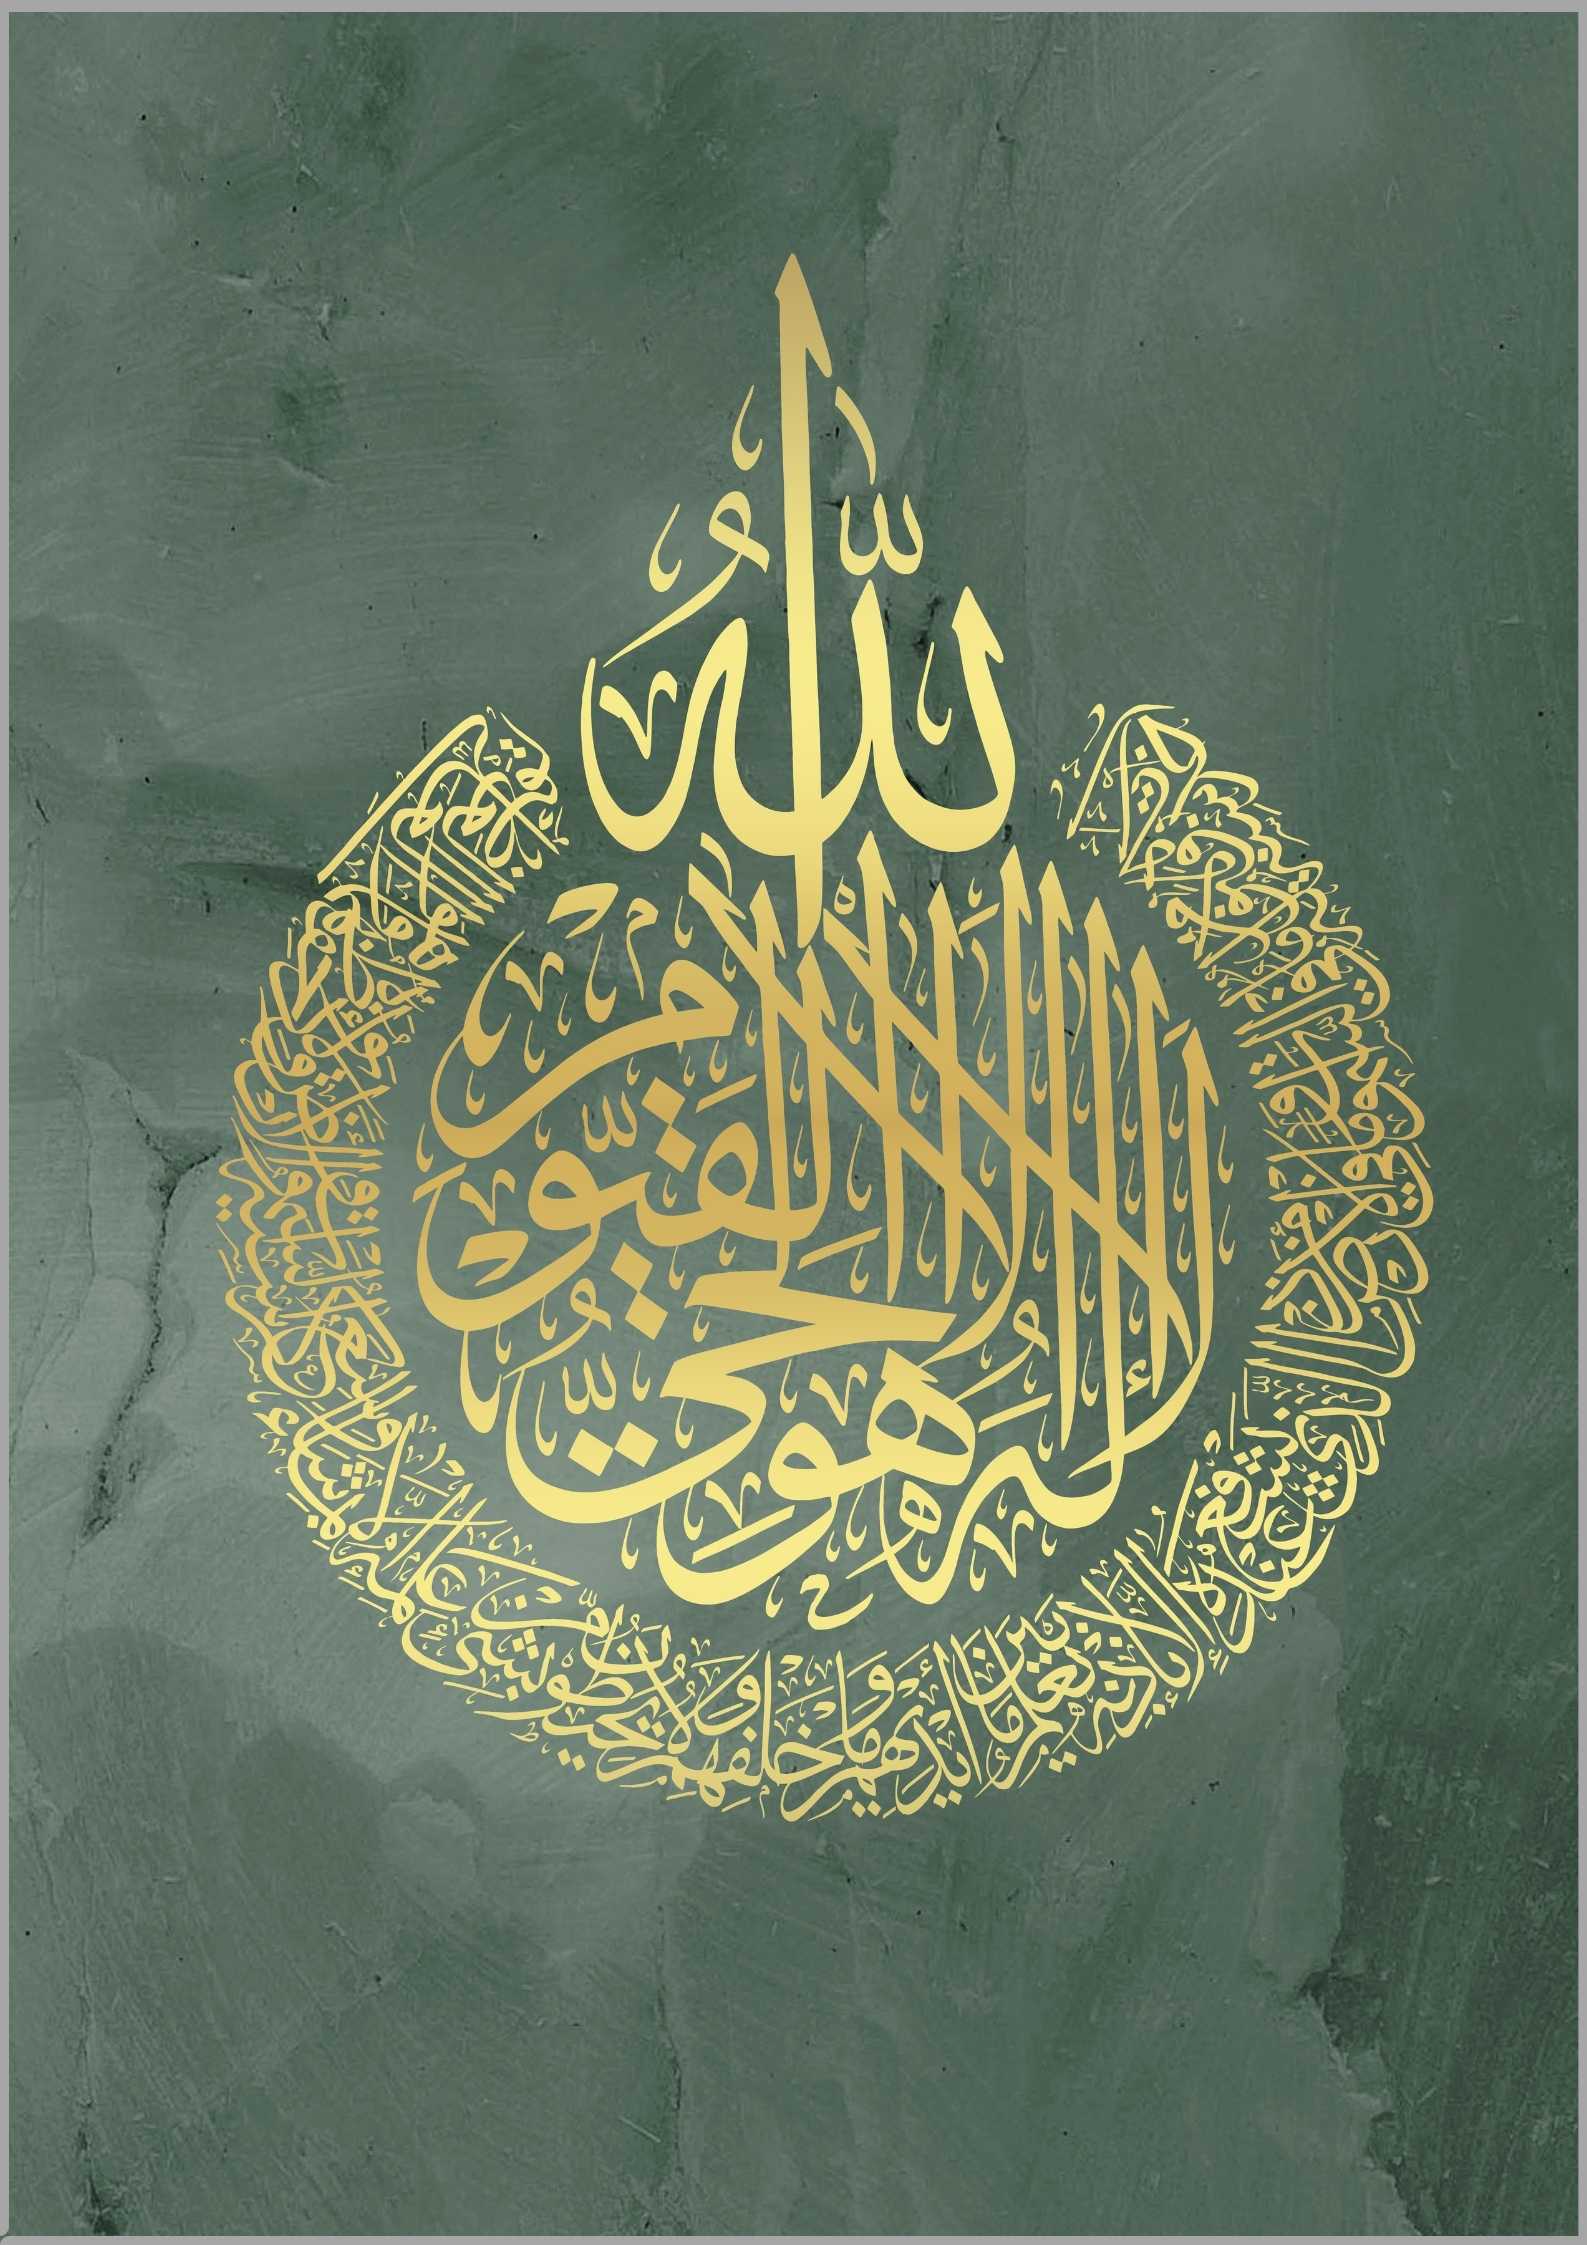 Islamische Poster, Islamisches Wandbild